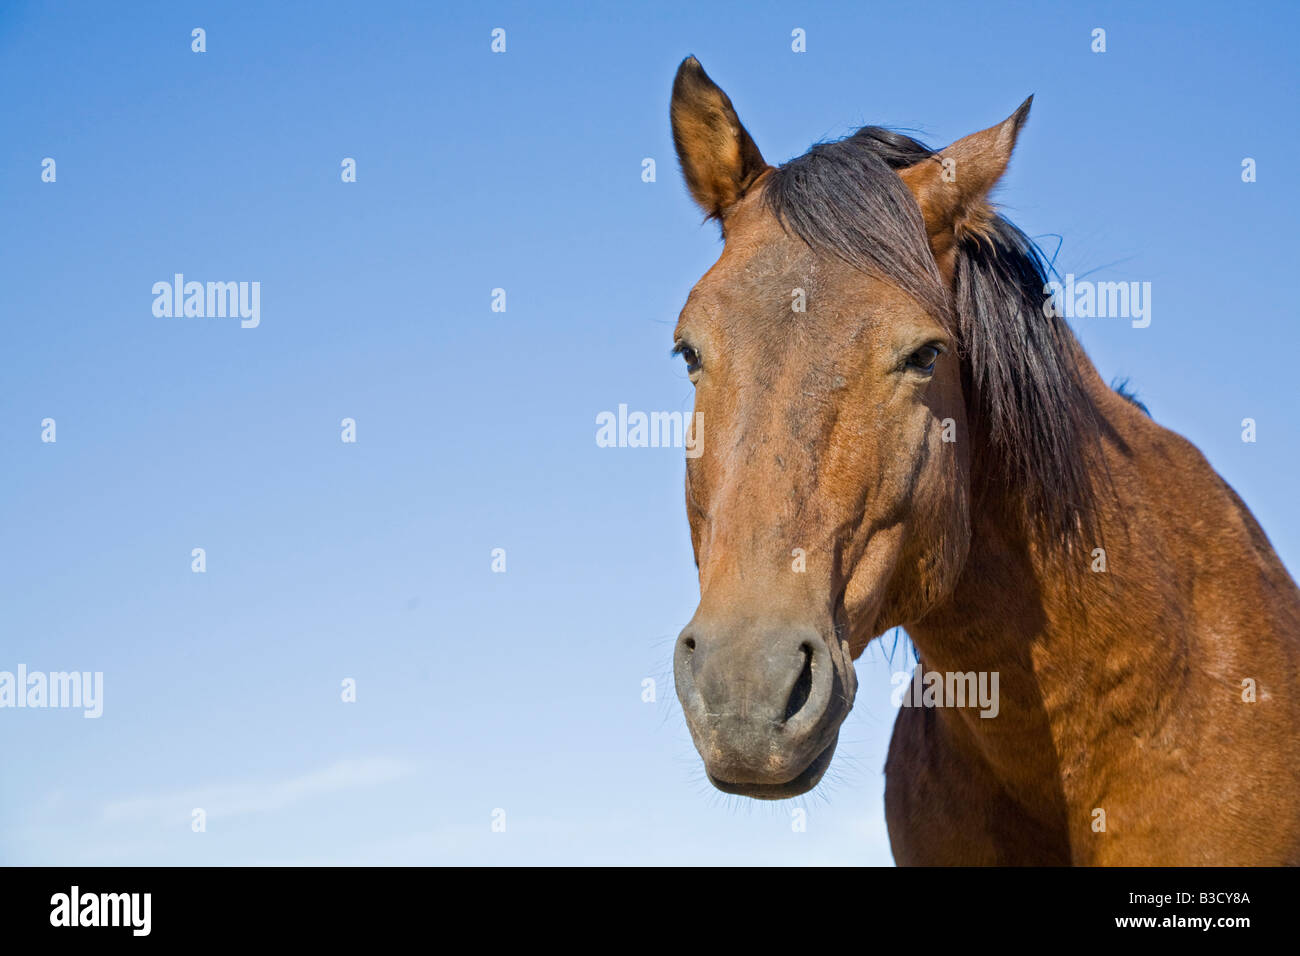 Africa, Namibia, Wild horse, portrait, close-up Stock Photo